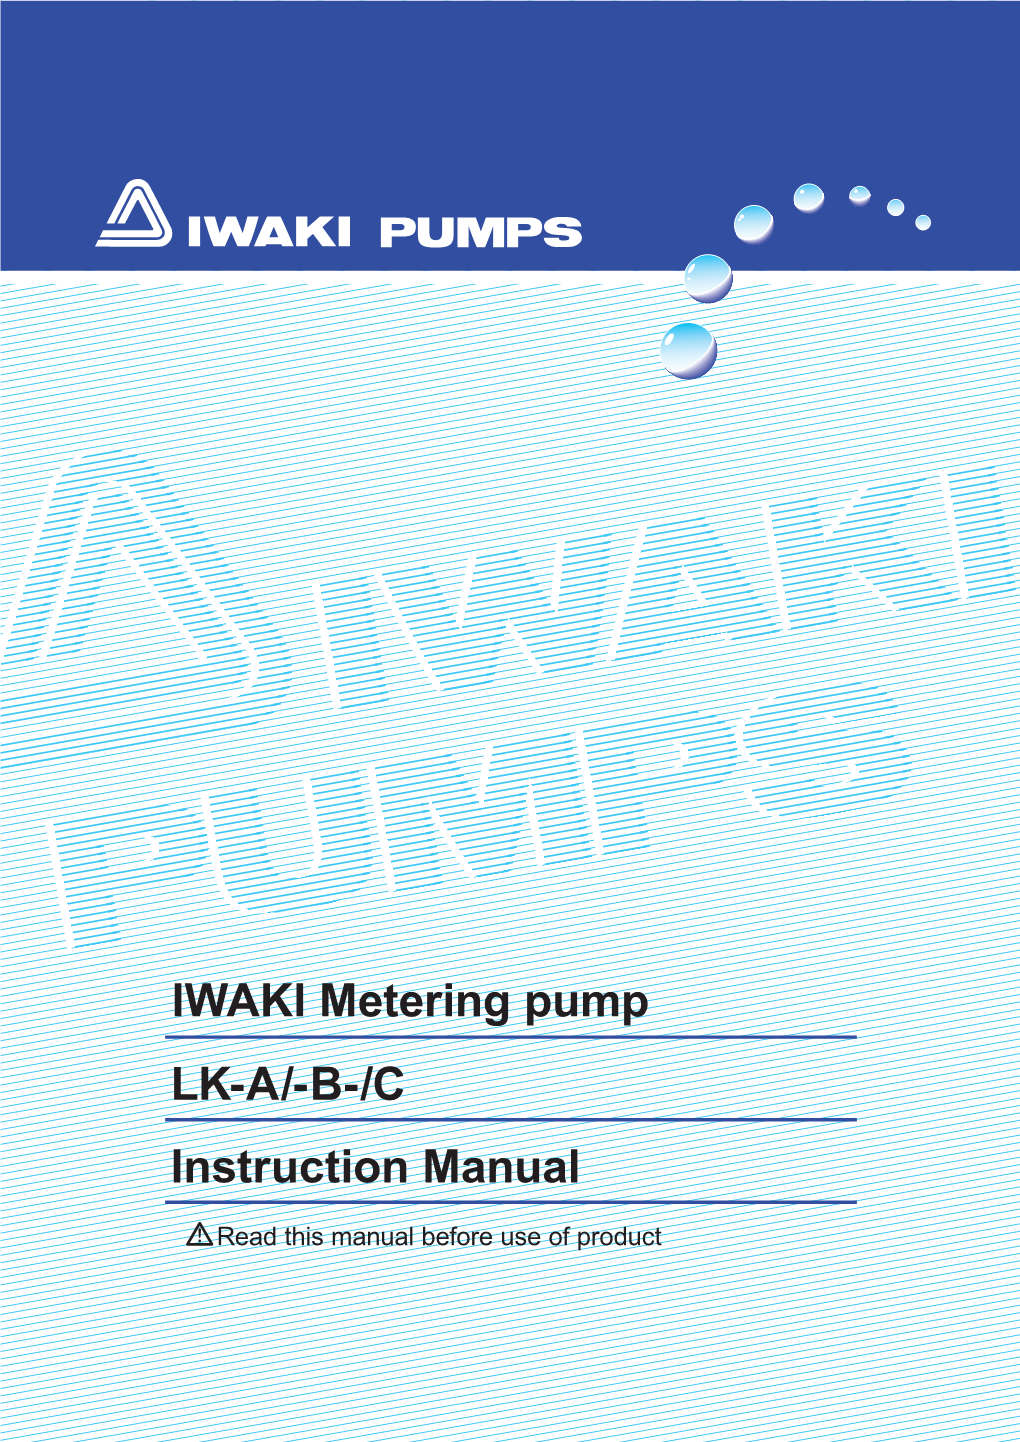 IWAKI Metering Pump LK-A/-B-/C Instruction Manual